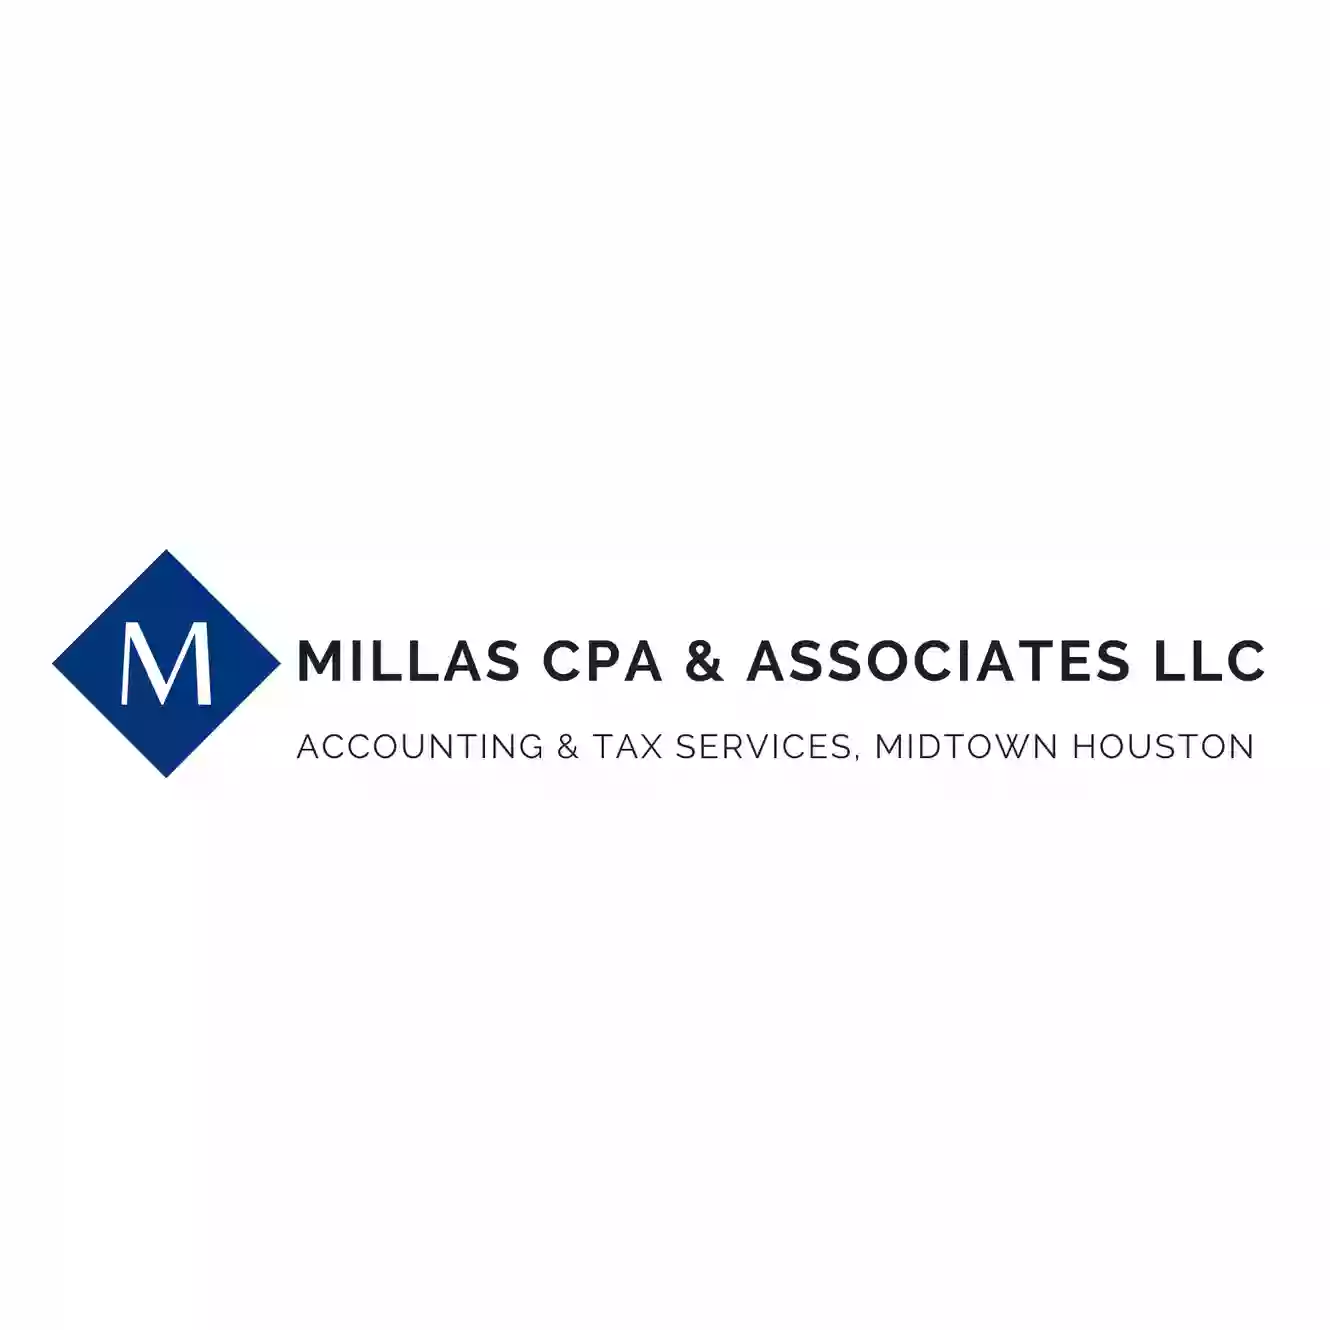 Millas CPA & Associates LLC